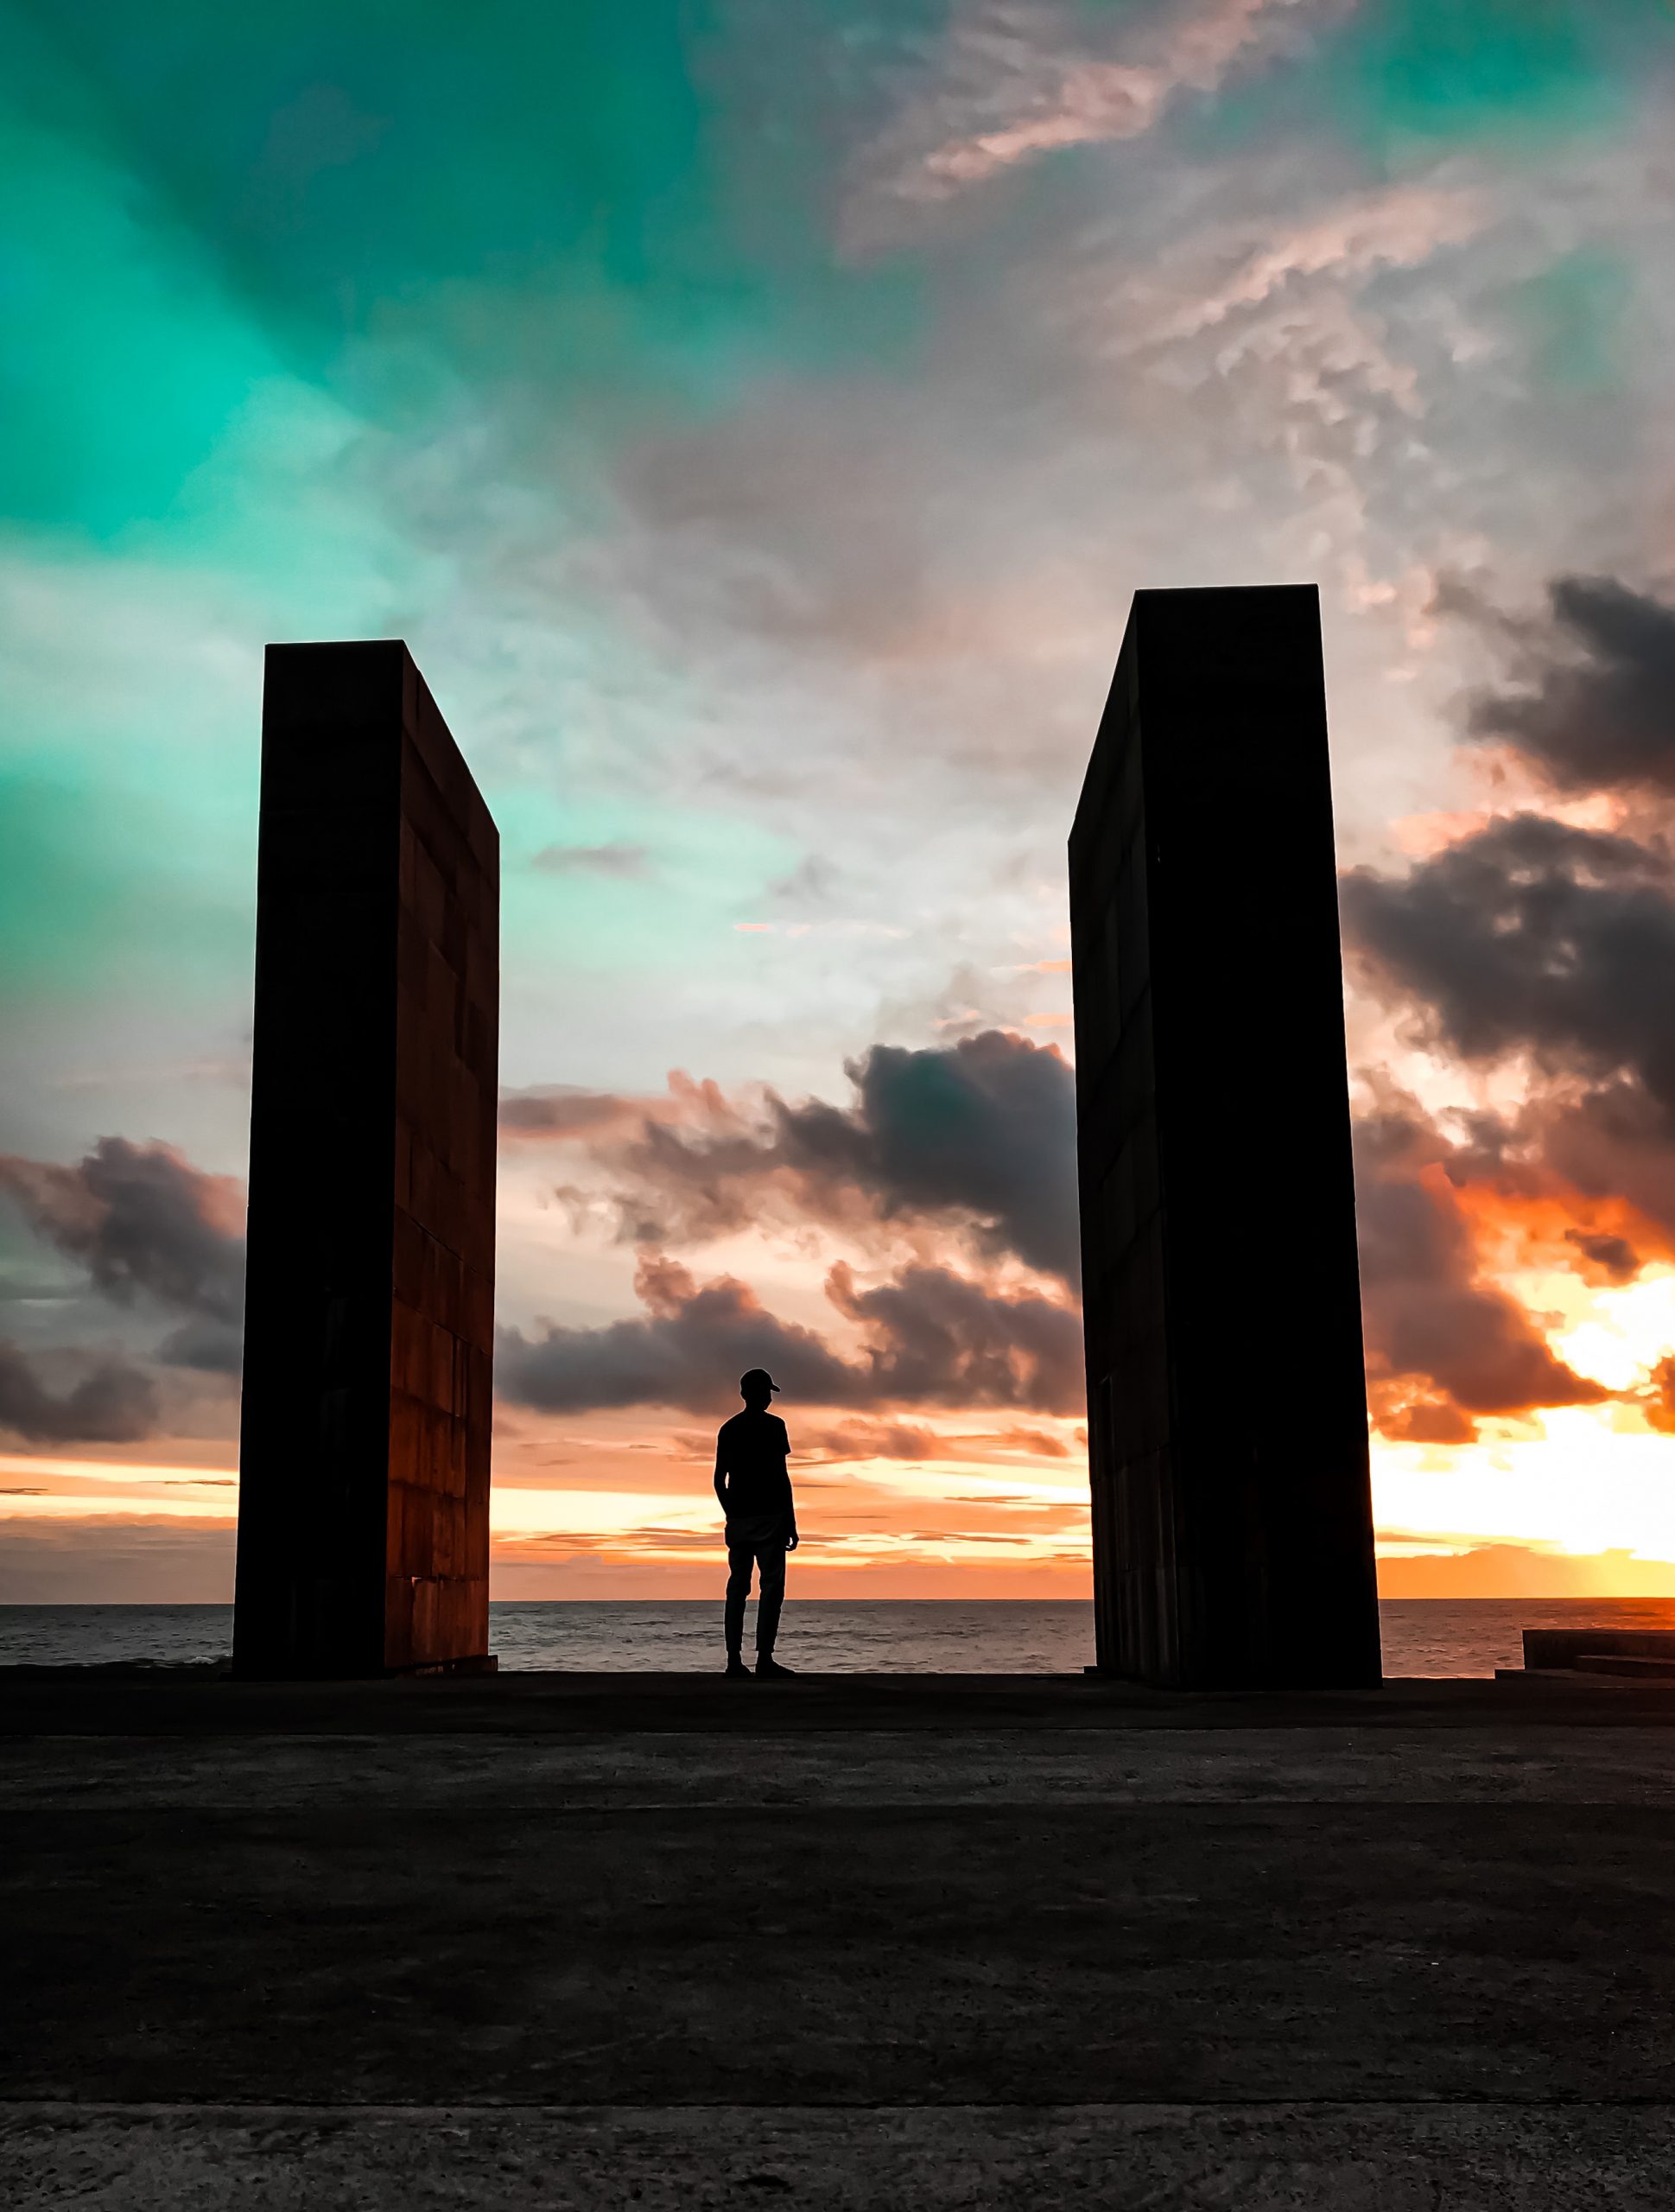 Guy standing in between two pillars at beach